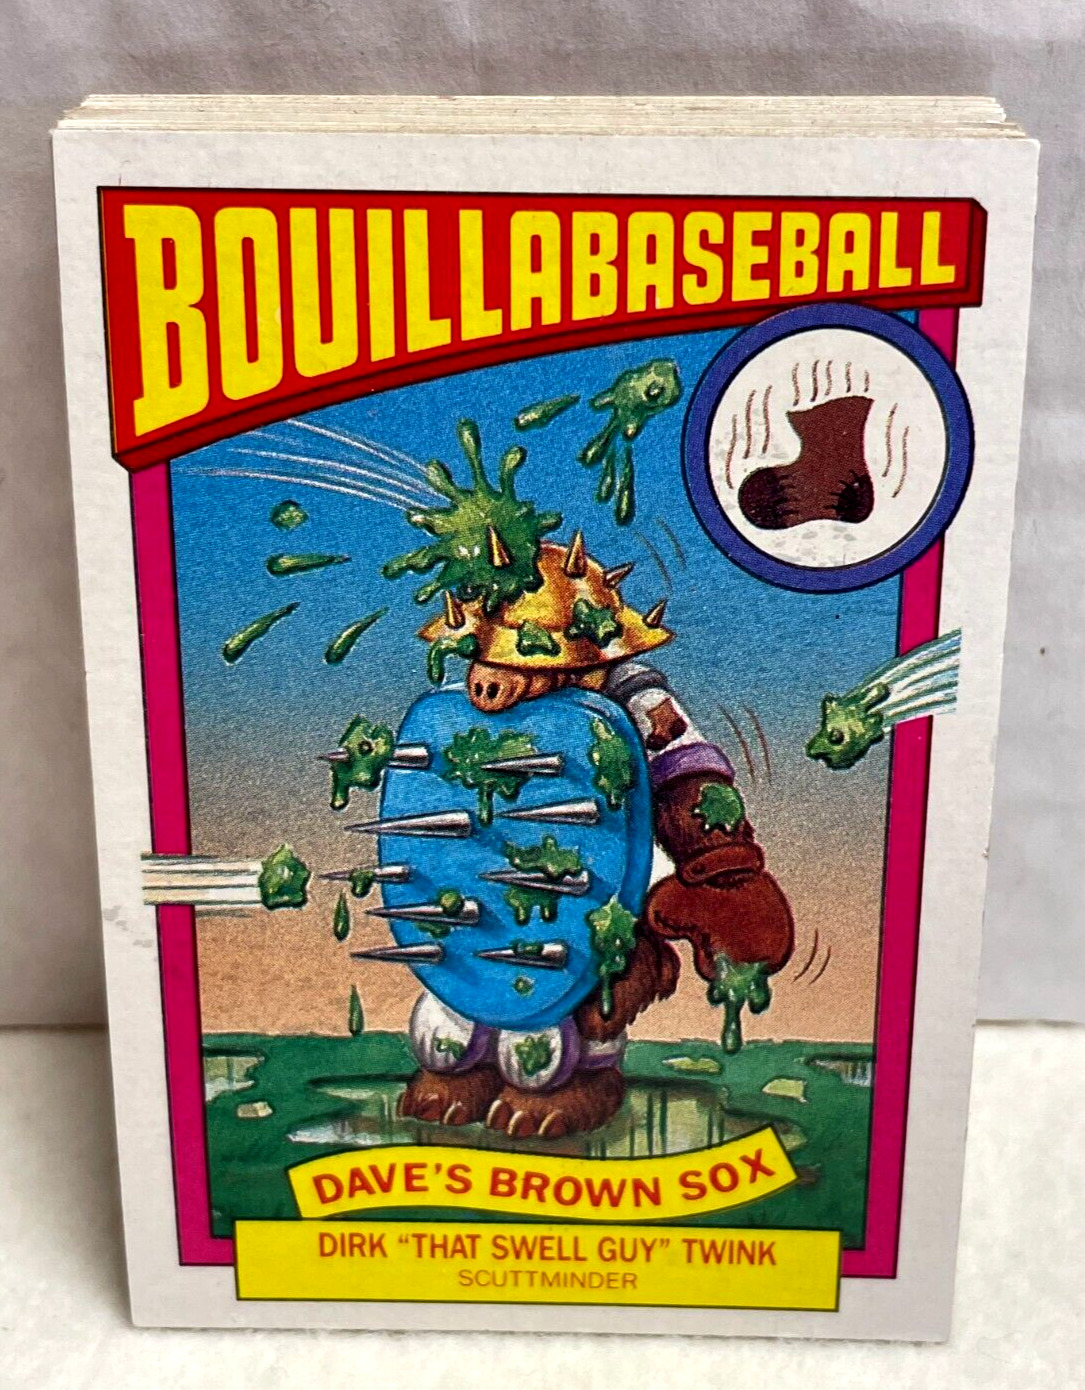 1988 ALF TV Series Bouillabaseball Trading Cards #23B-44B TOPPS/Alien Production